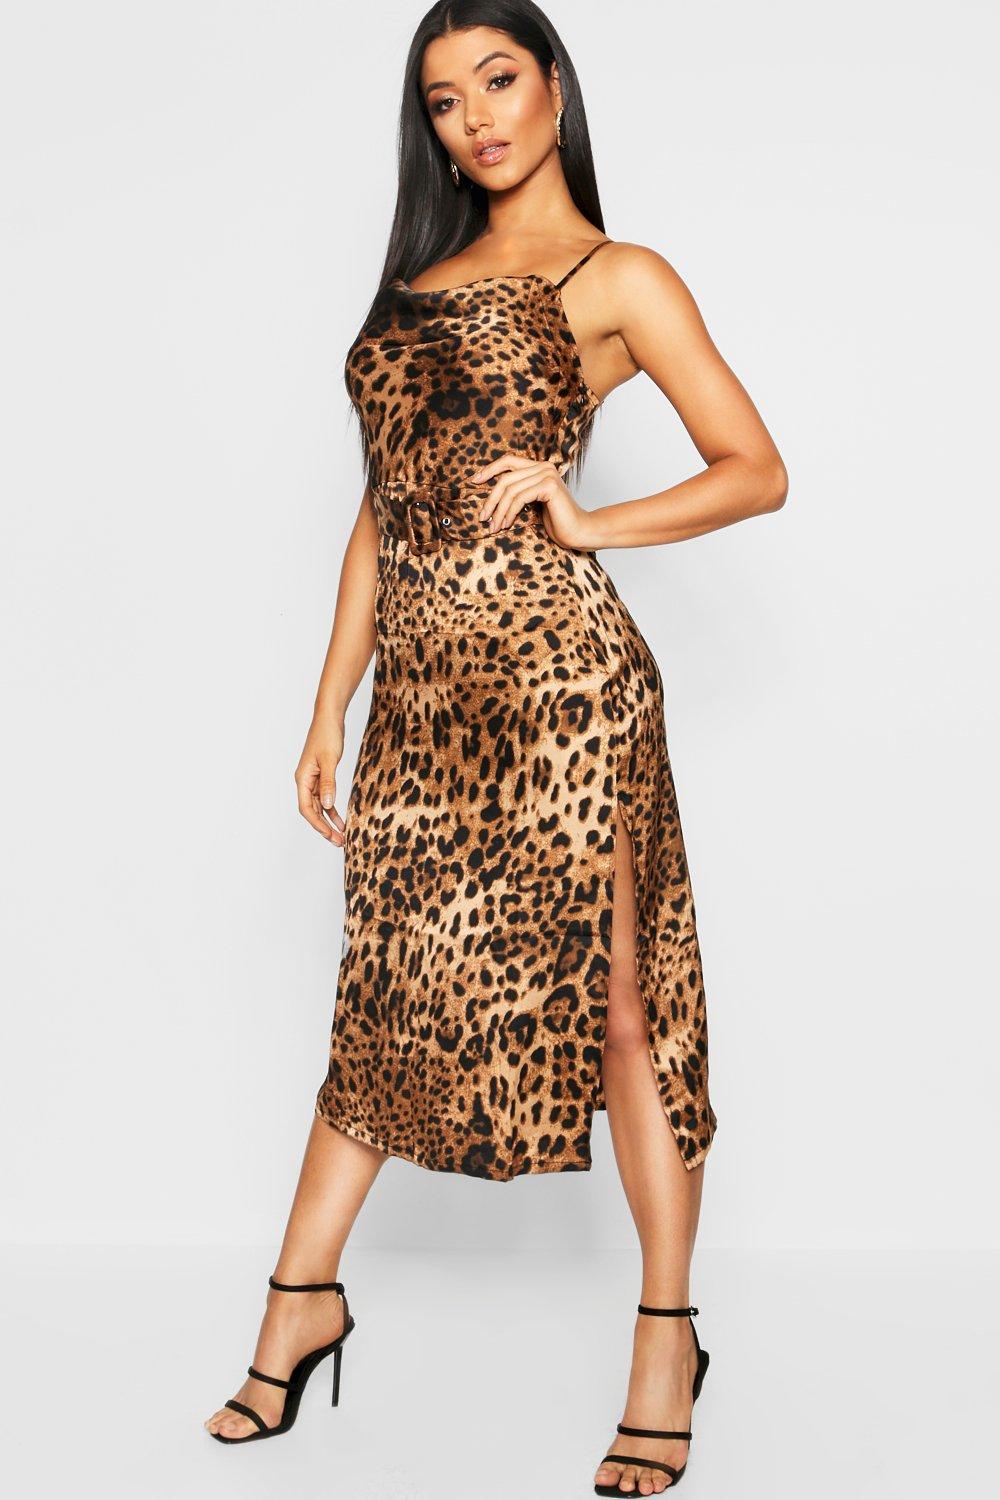 strappy leopard dress